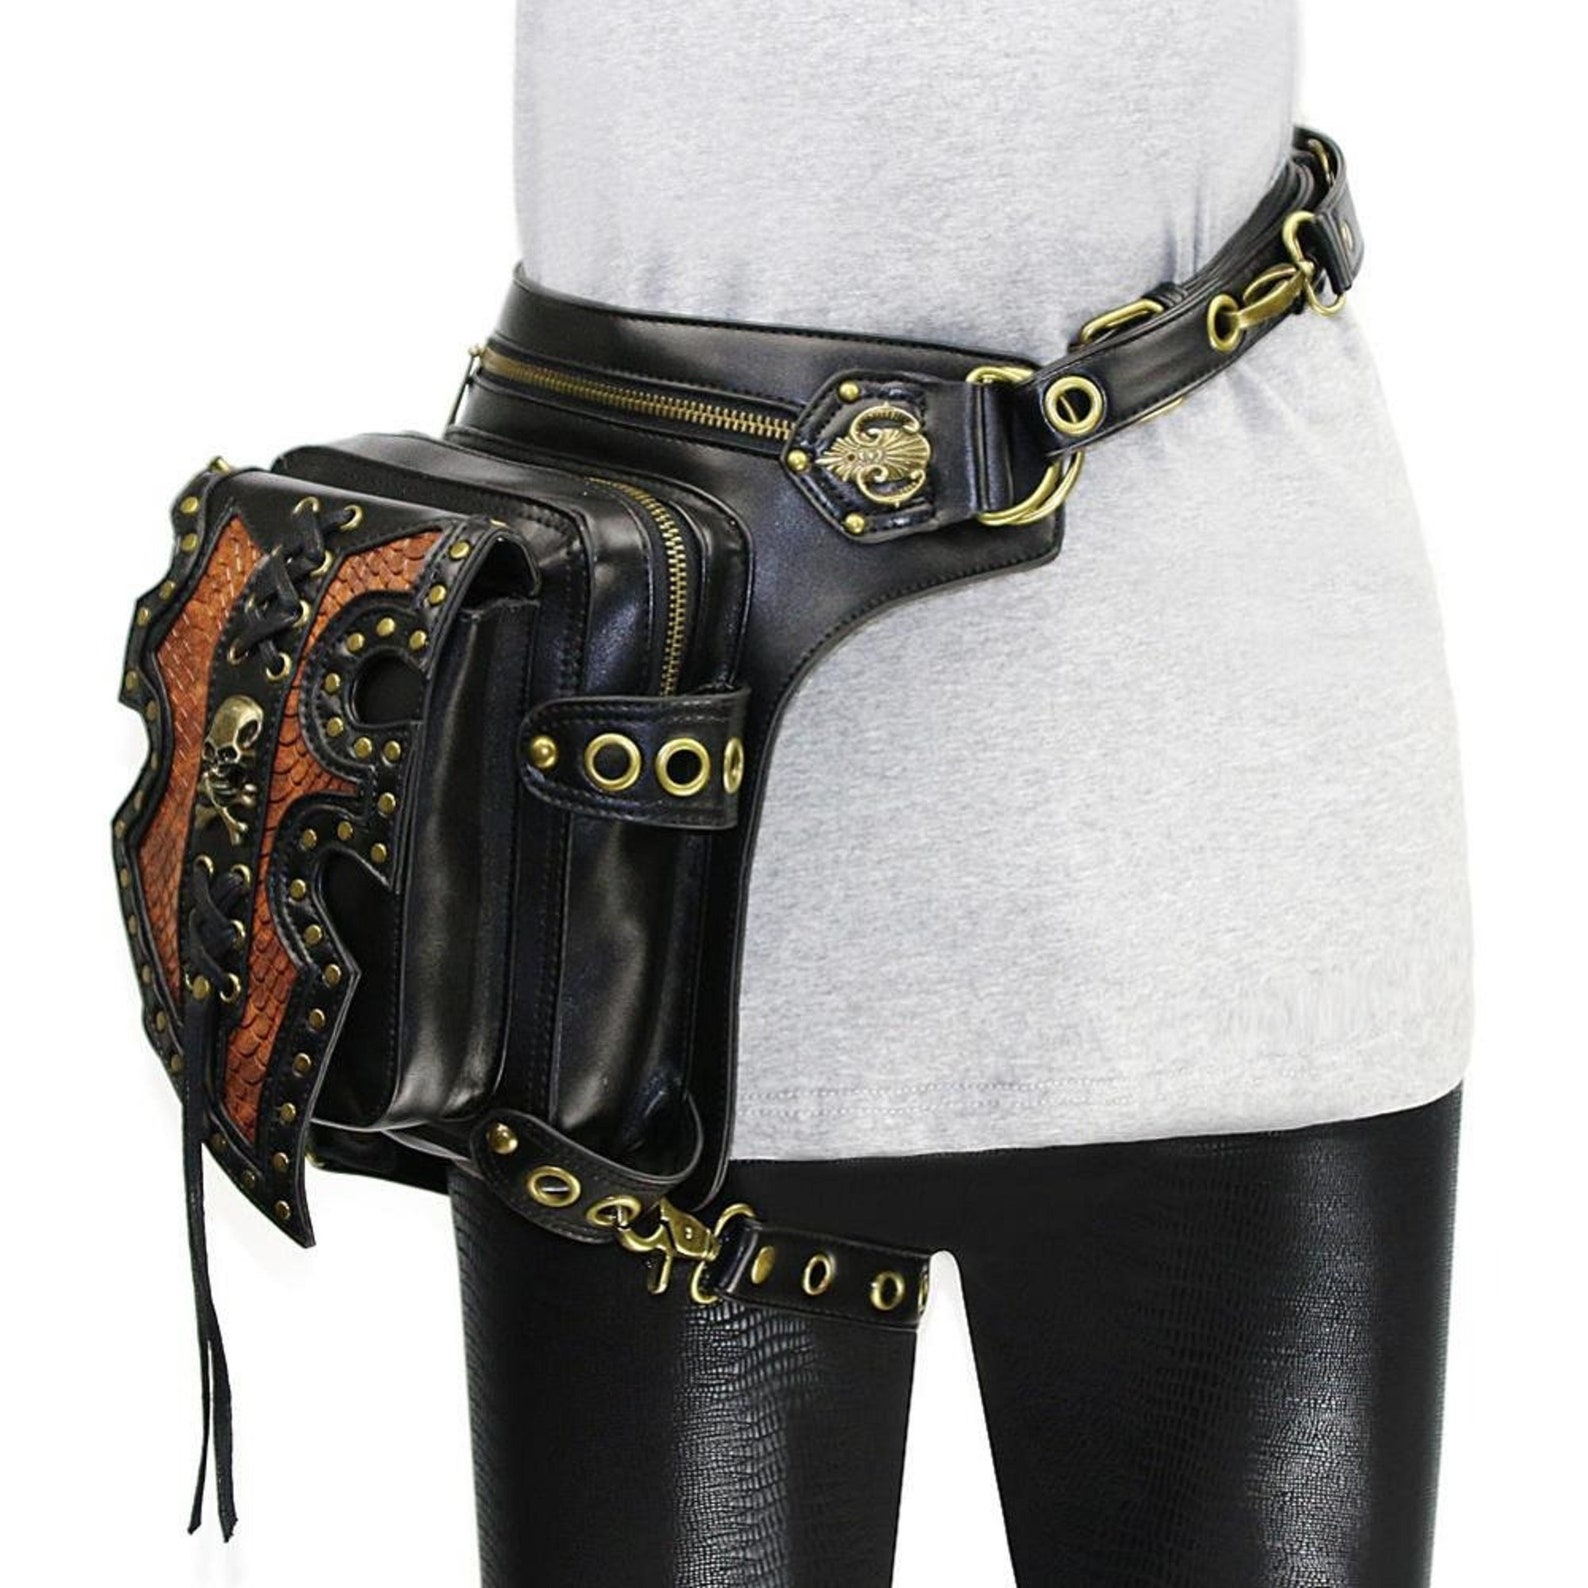 Women's Drop Leg Bag High Quality Leather Multi-purpose | Etsy